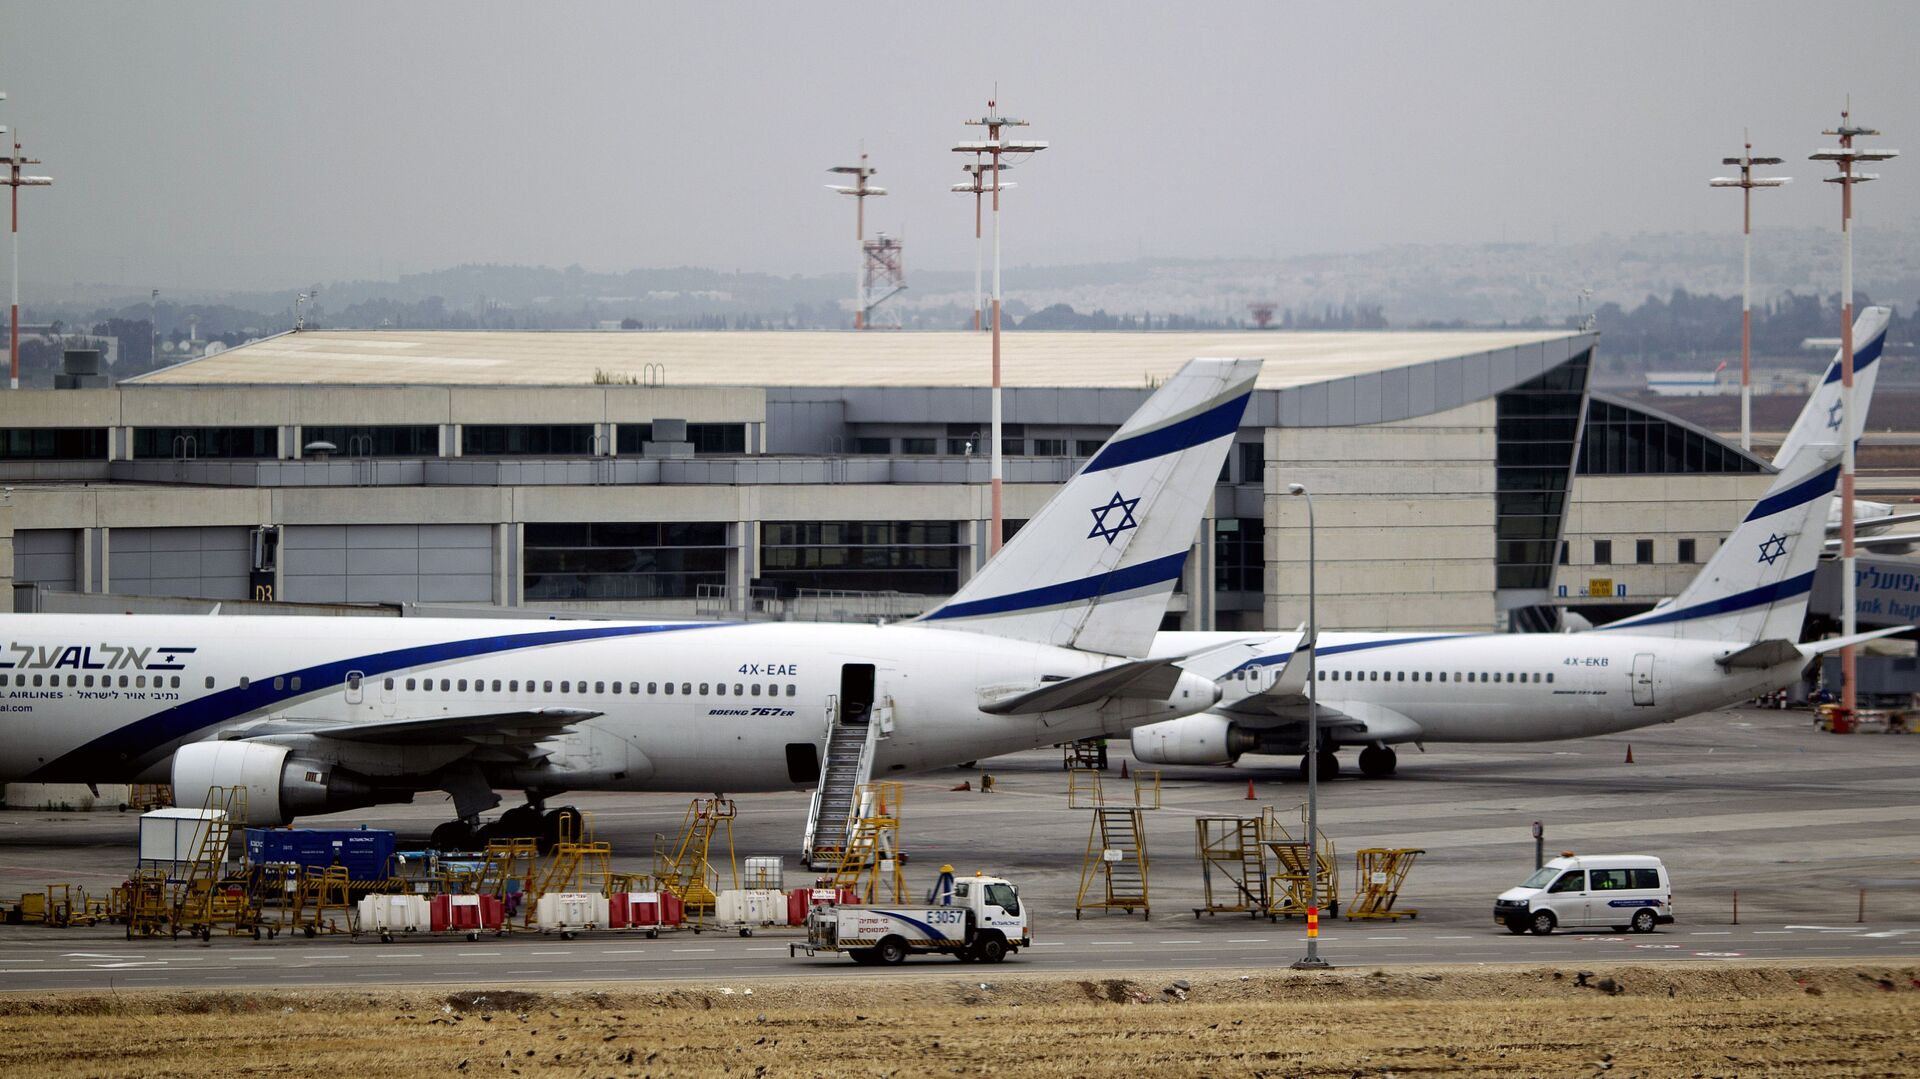 مطار بن غوريون الدولي في تل أبيب، إسرائيل 21 أبريل/ نيسان 2013 - سبوتنيك عربي, 1920, 23.01.2022